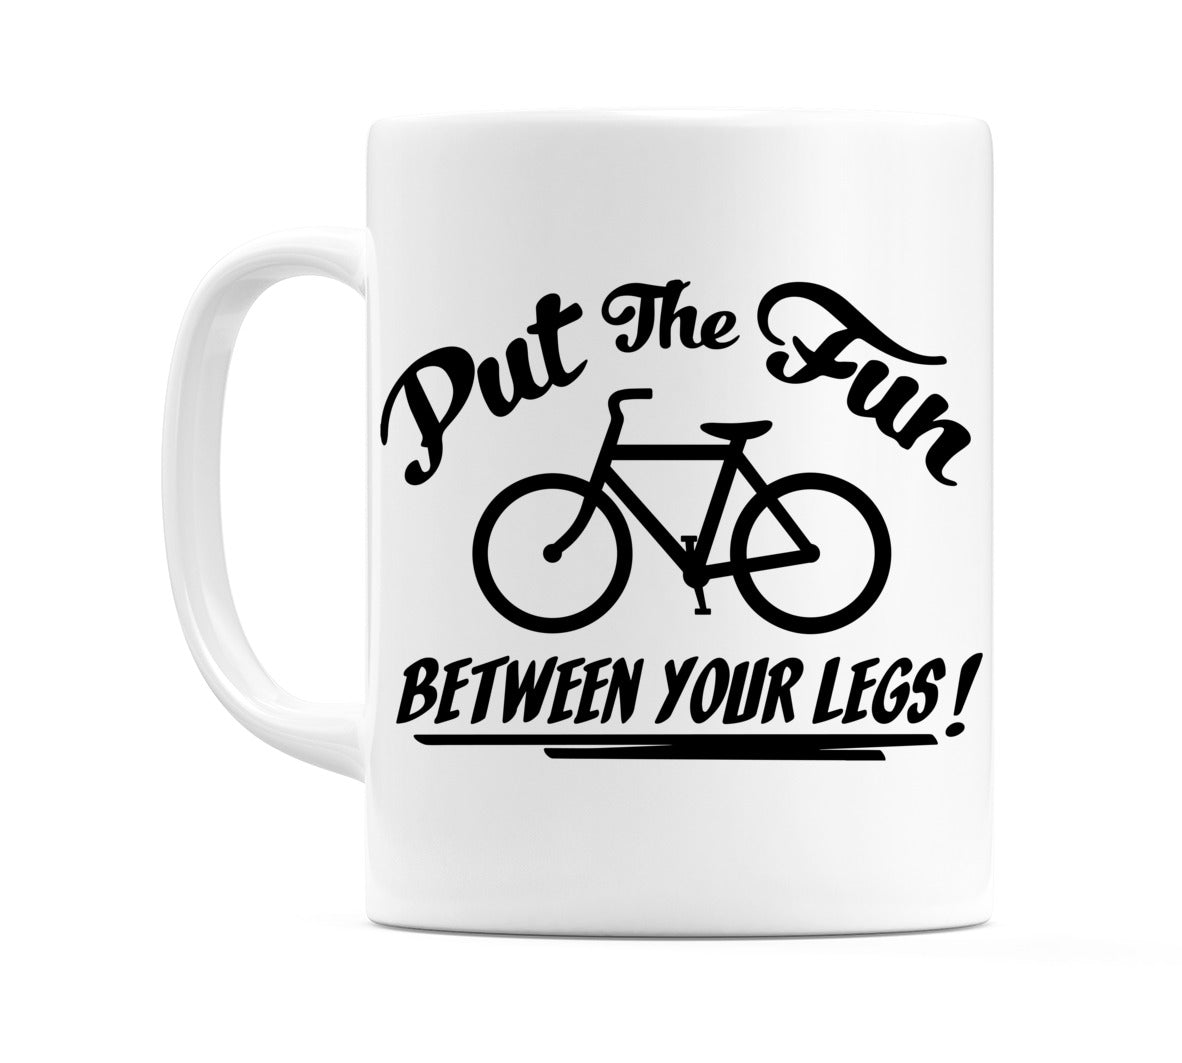 Put The Fun Between Your Legs! (Bicycle) Mug